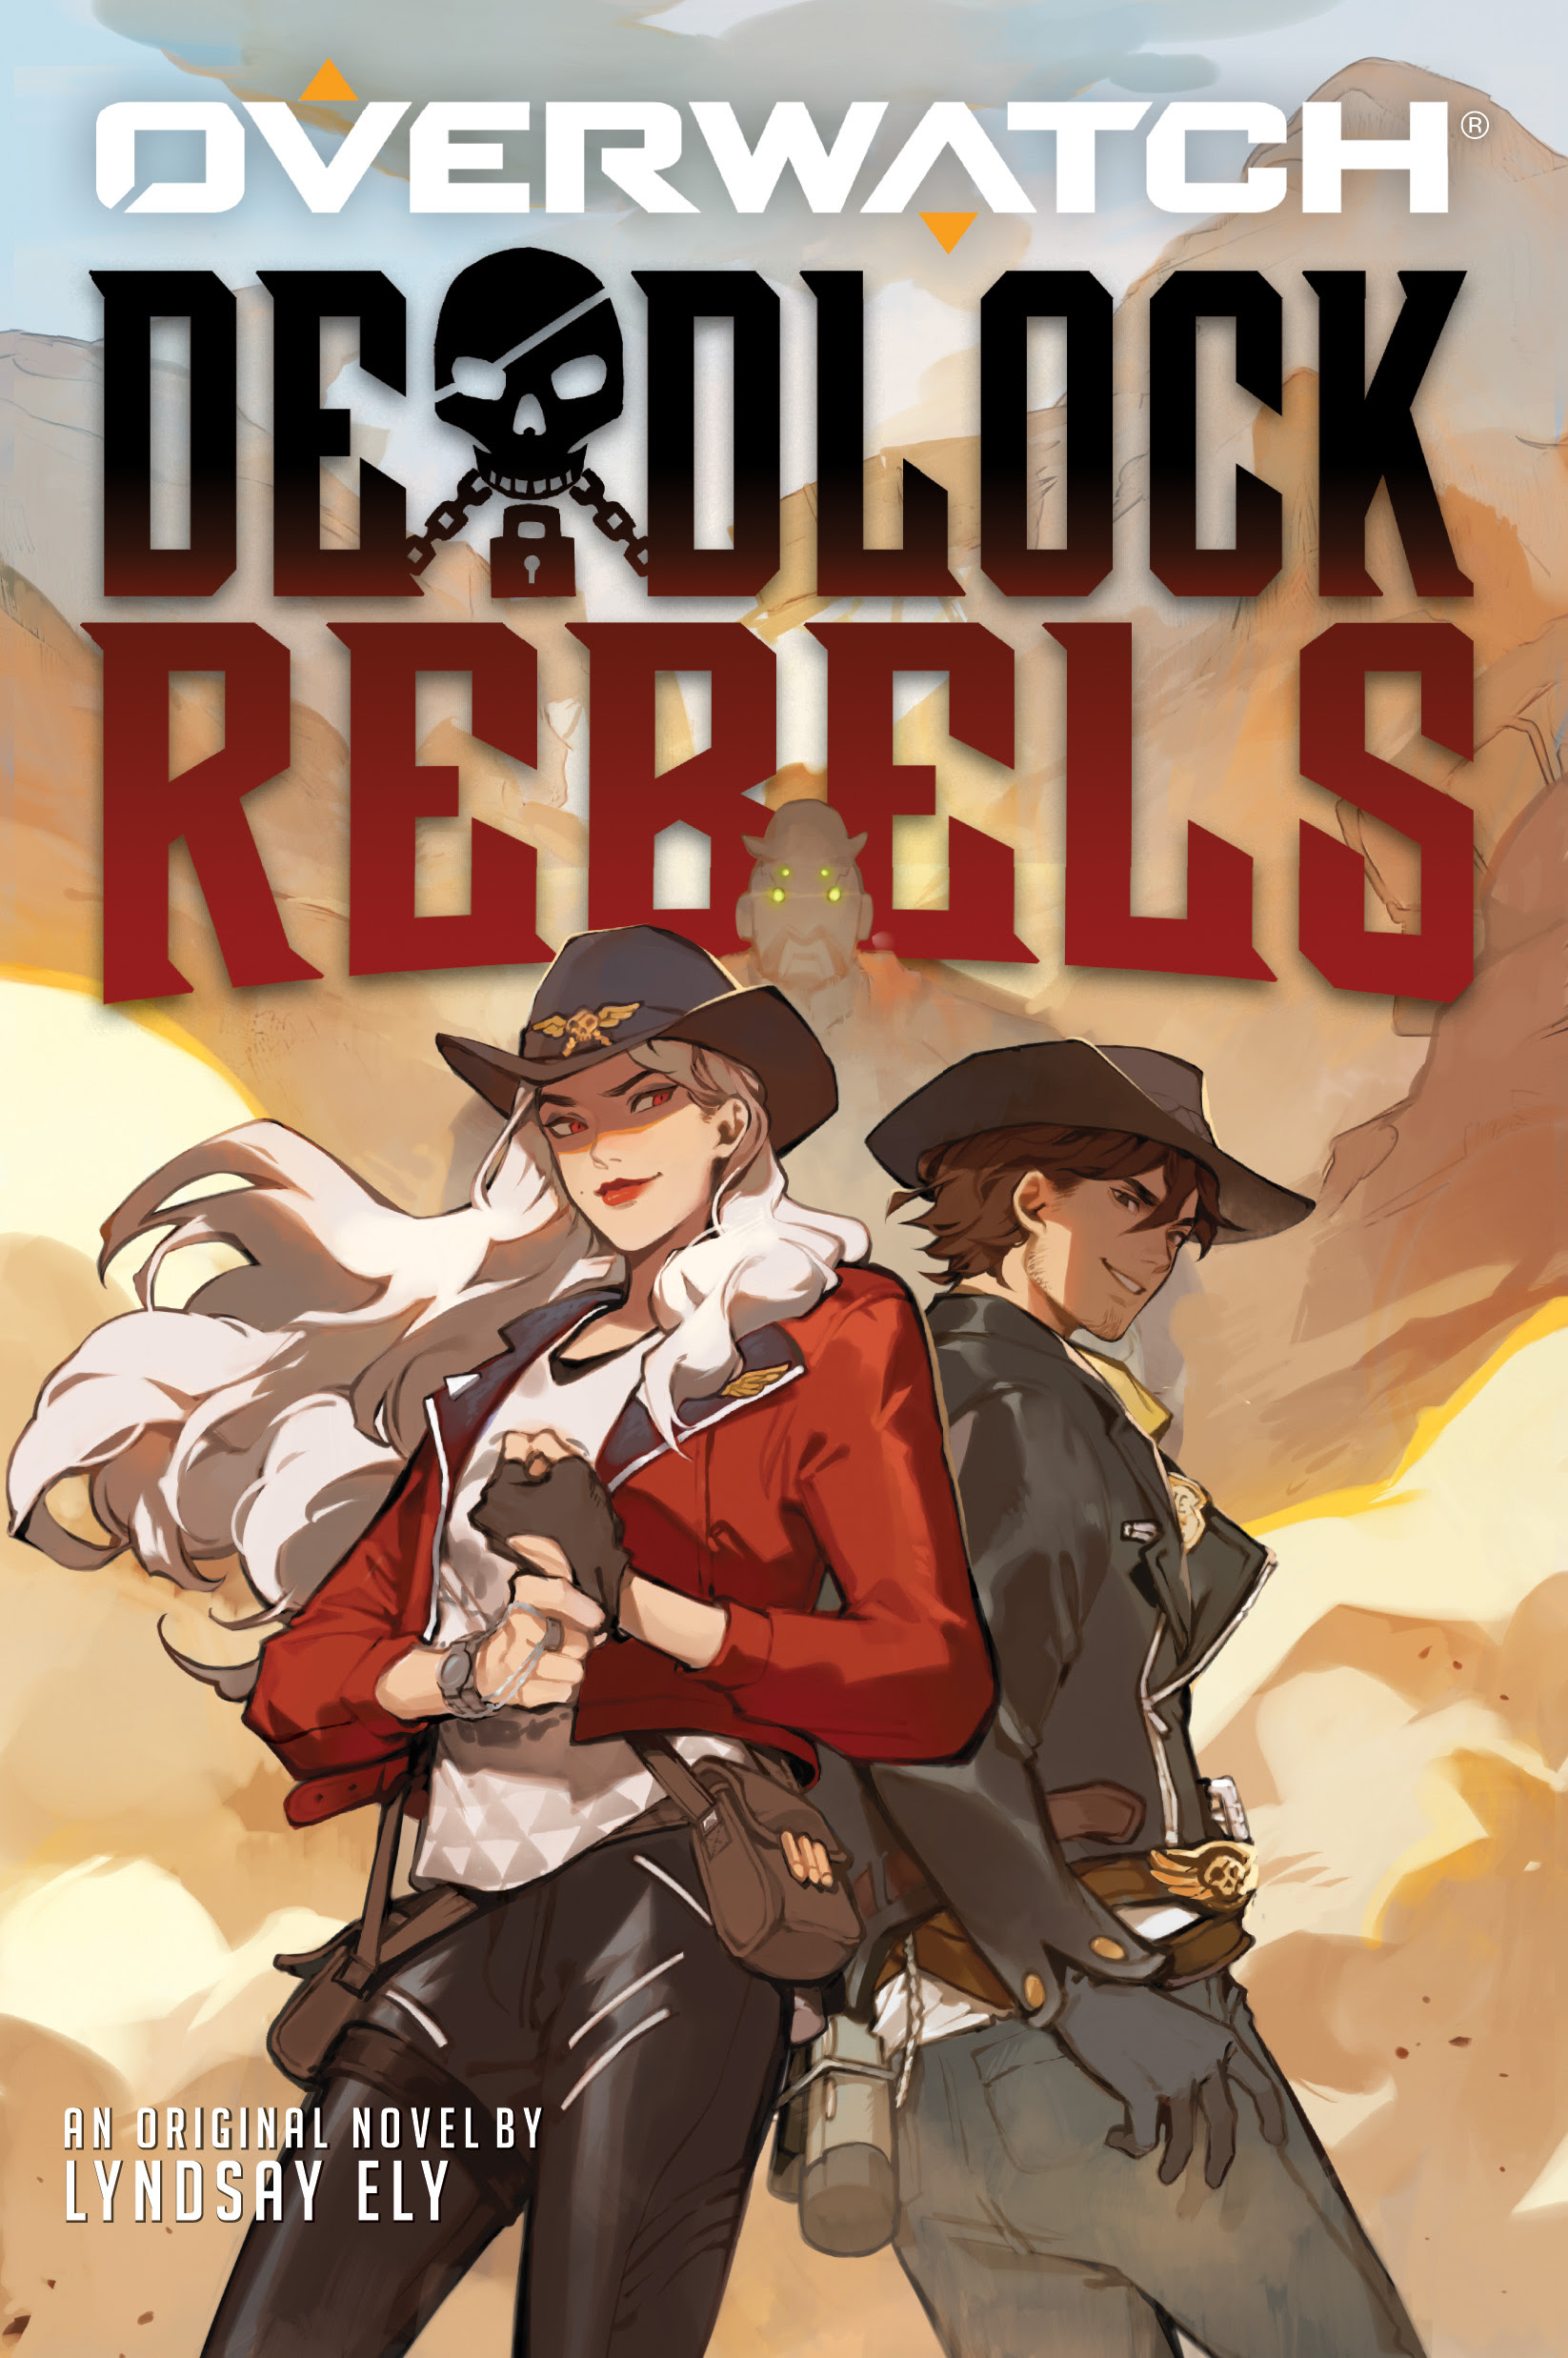 pdf download Deadlock Rebels